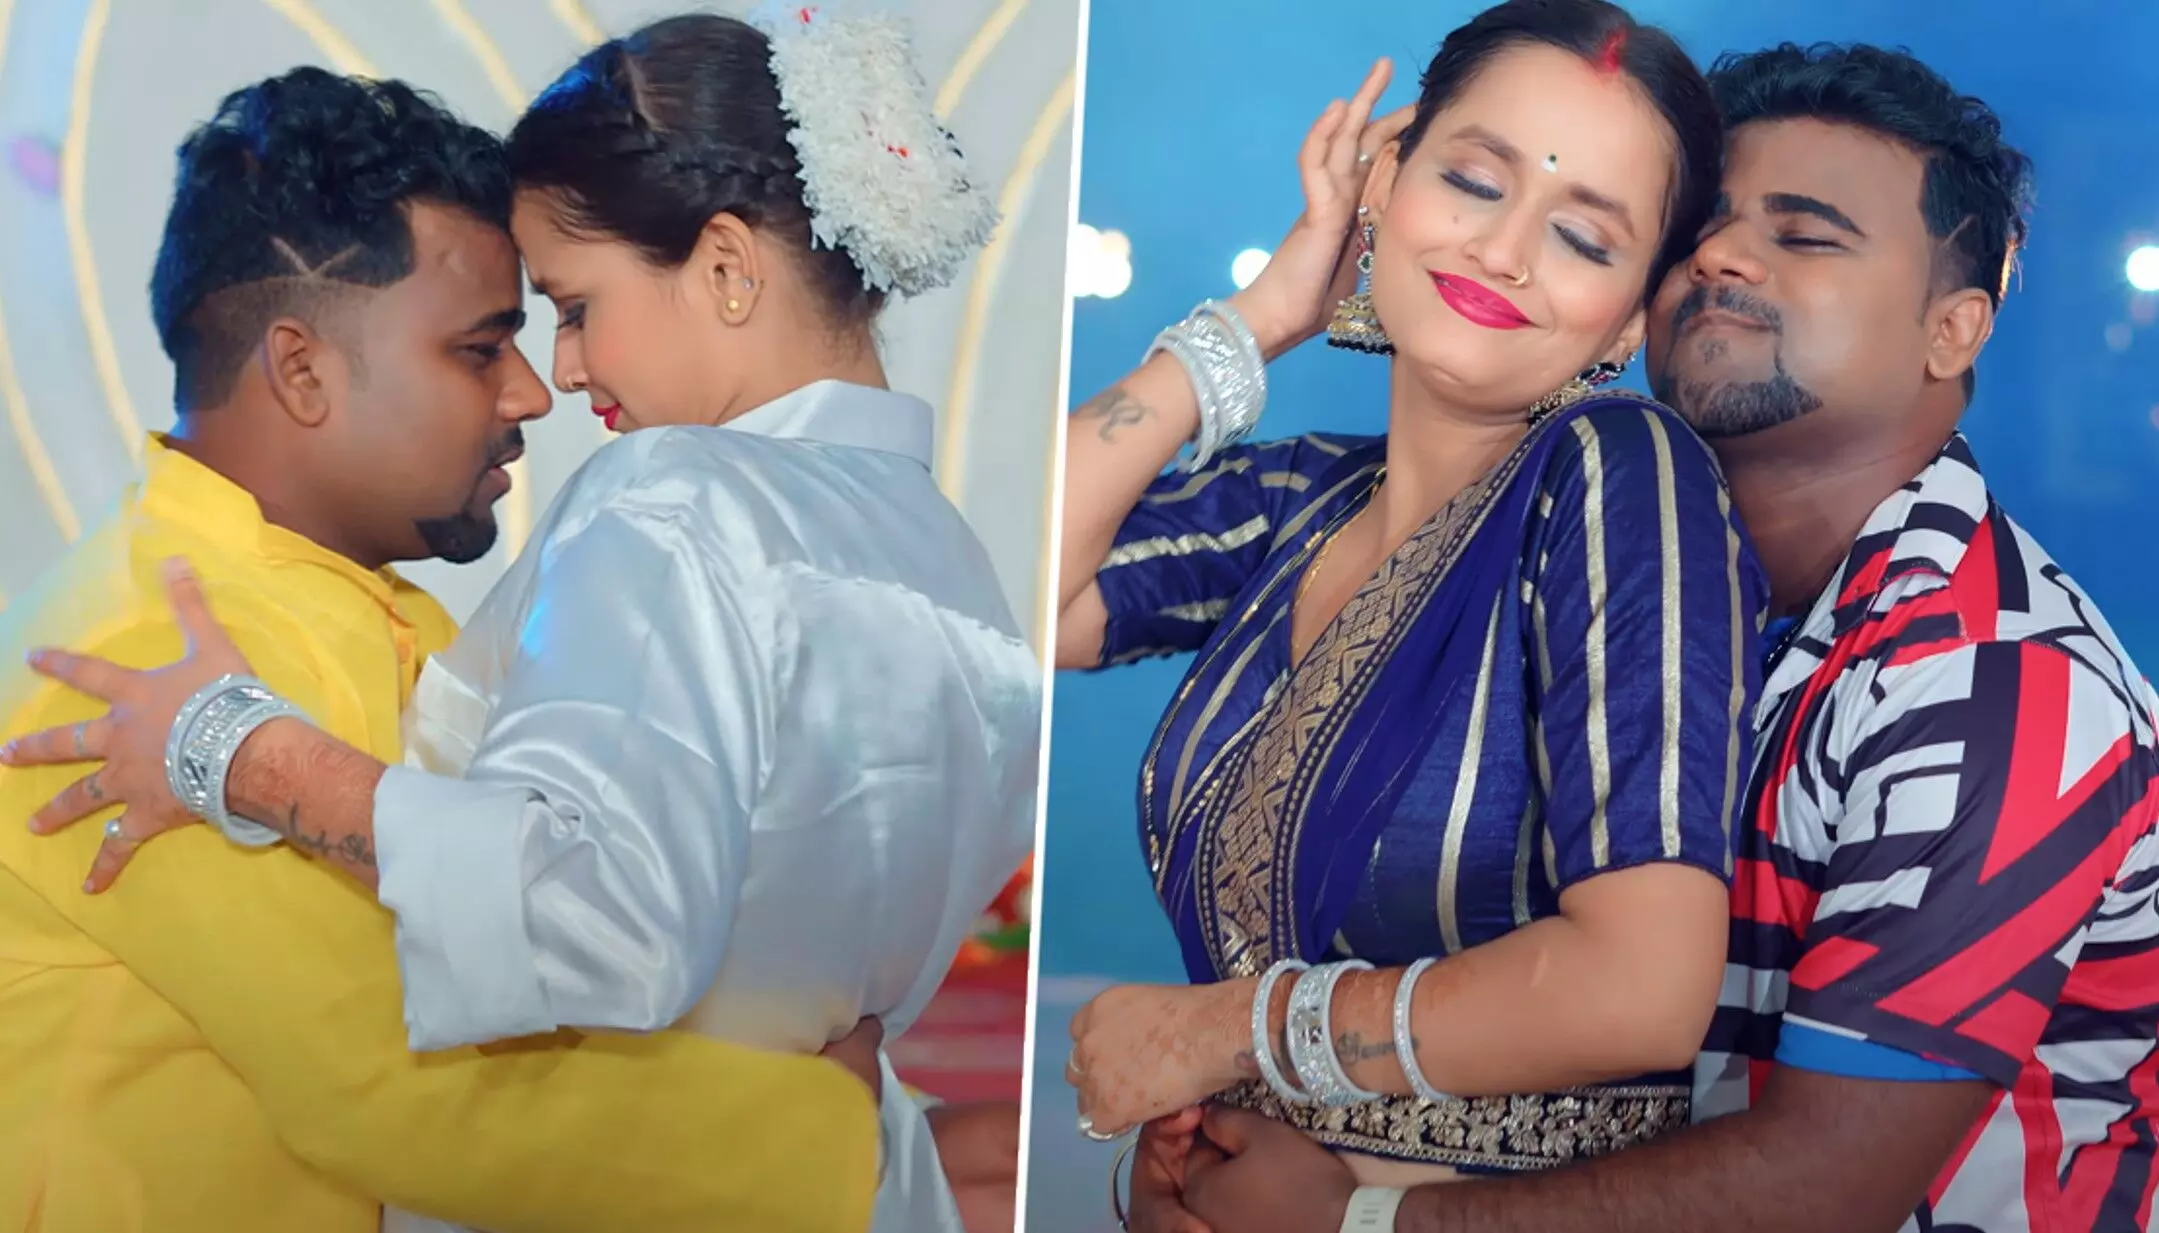 Bhojpuri Sexy Video : रिलीज हुआ भोजपुरी गाना उमर लड़िकयां बा हो, Sexy सॉन्ग में Hot सीन्स की भरमार